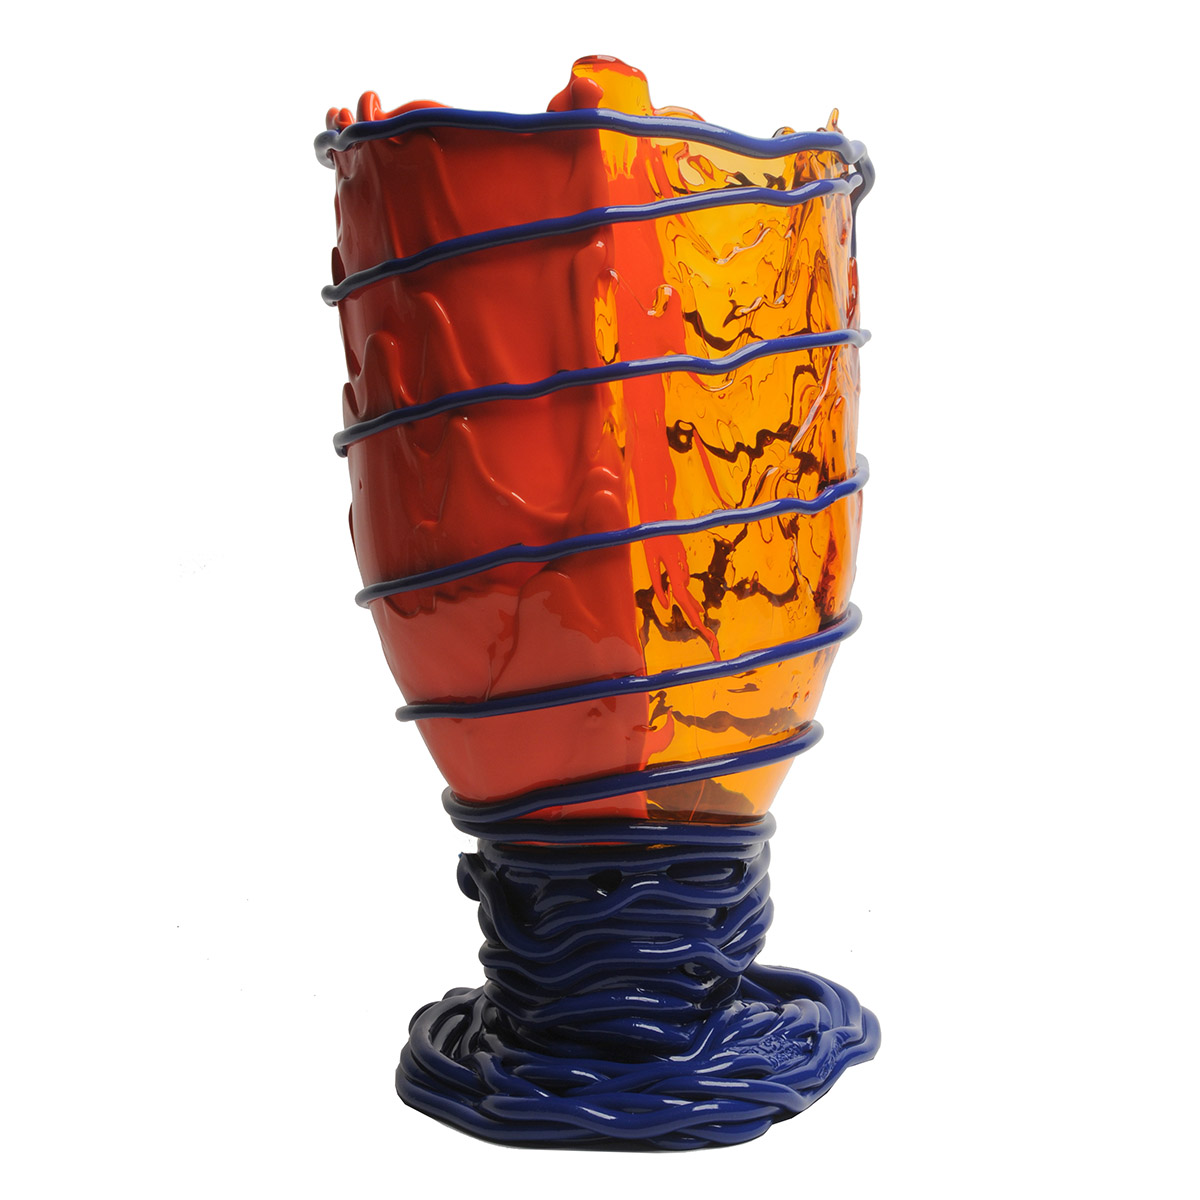 Vaso in resina Pompitu II extra colour by Corsi Design